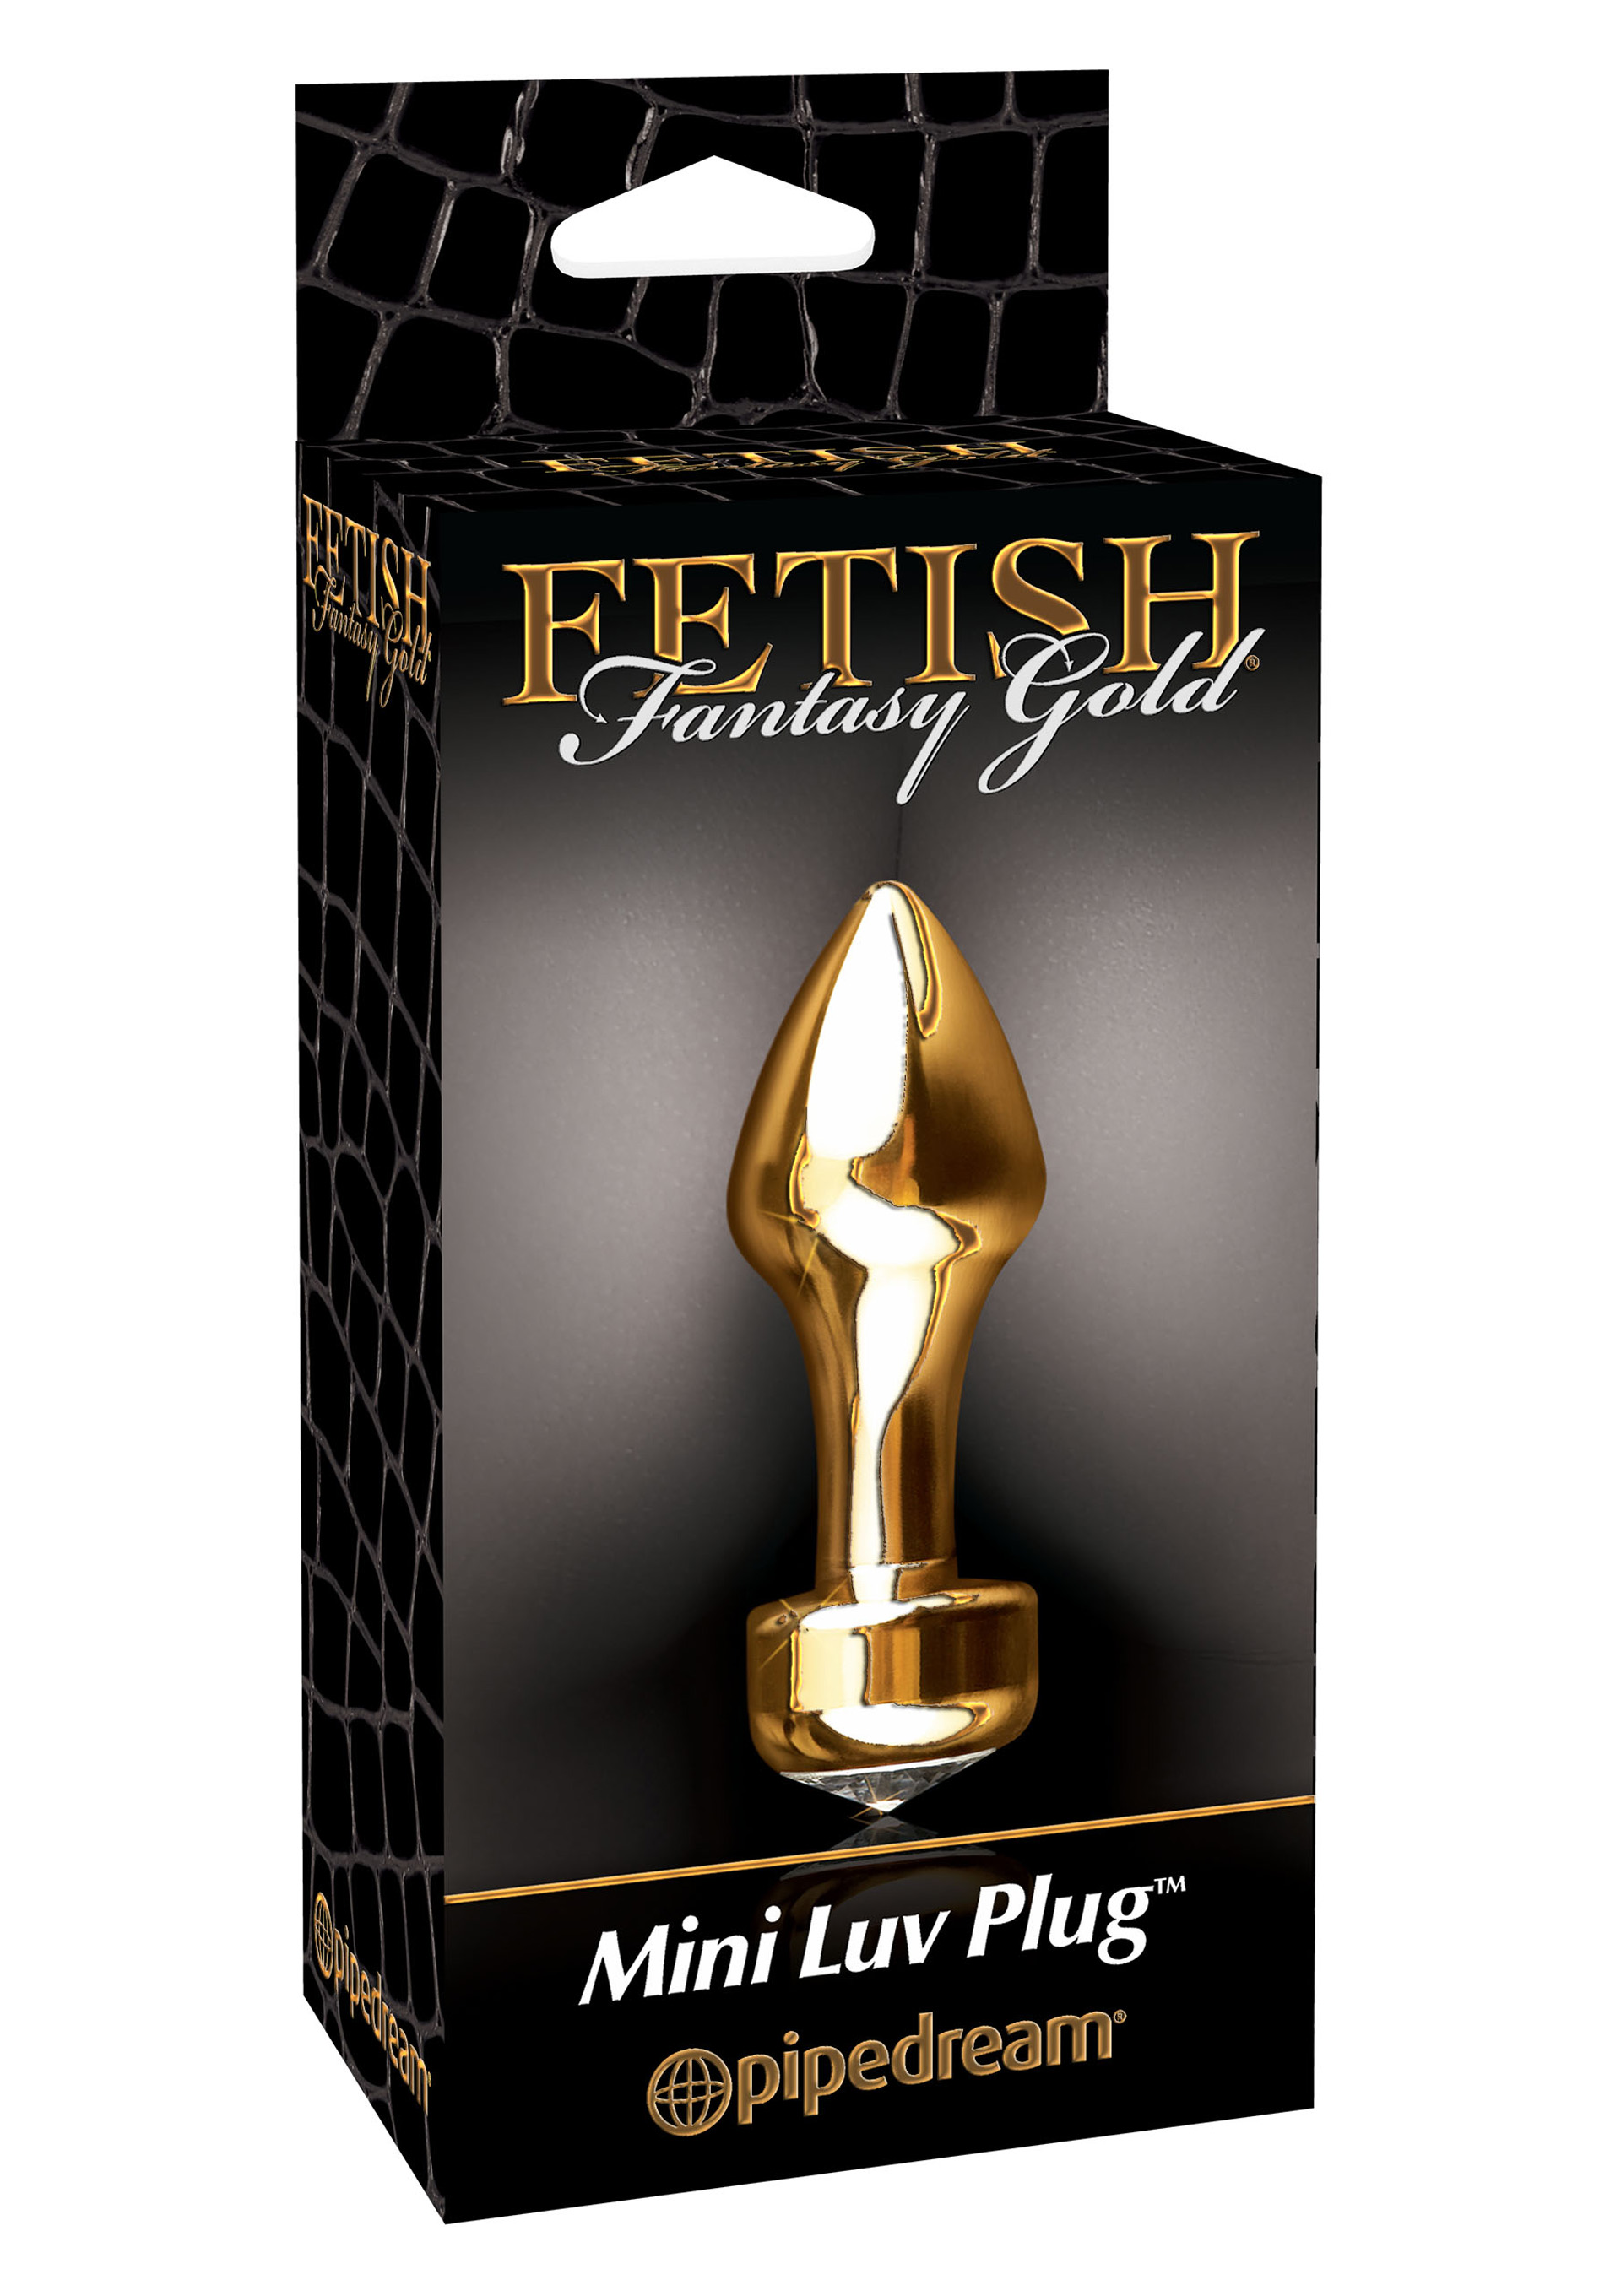 Fetish Fantasy Gold Mini Luv Plug.